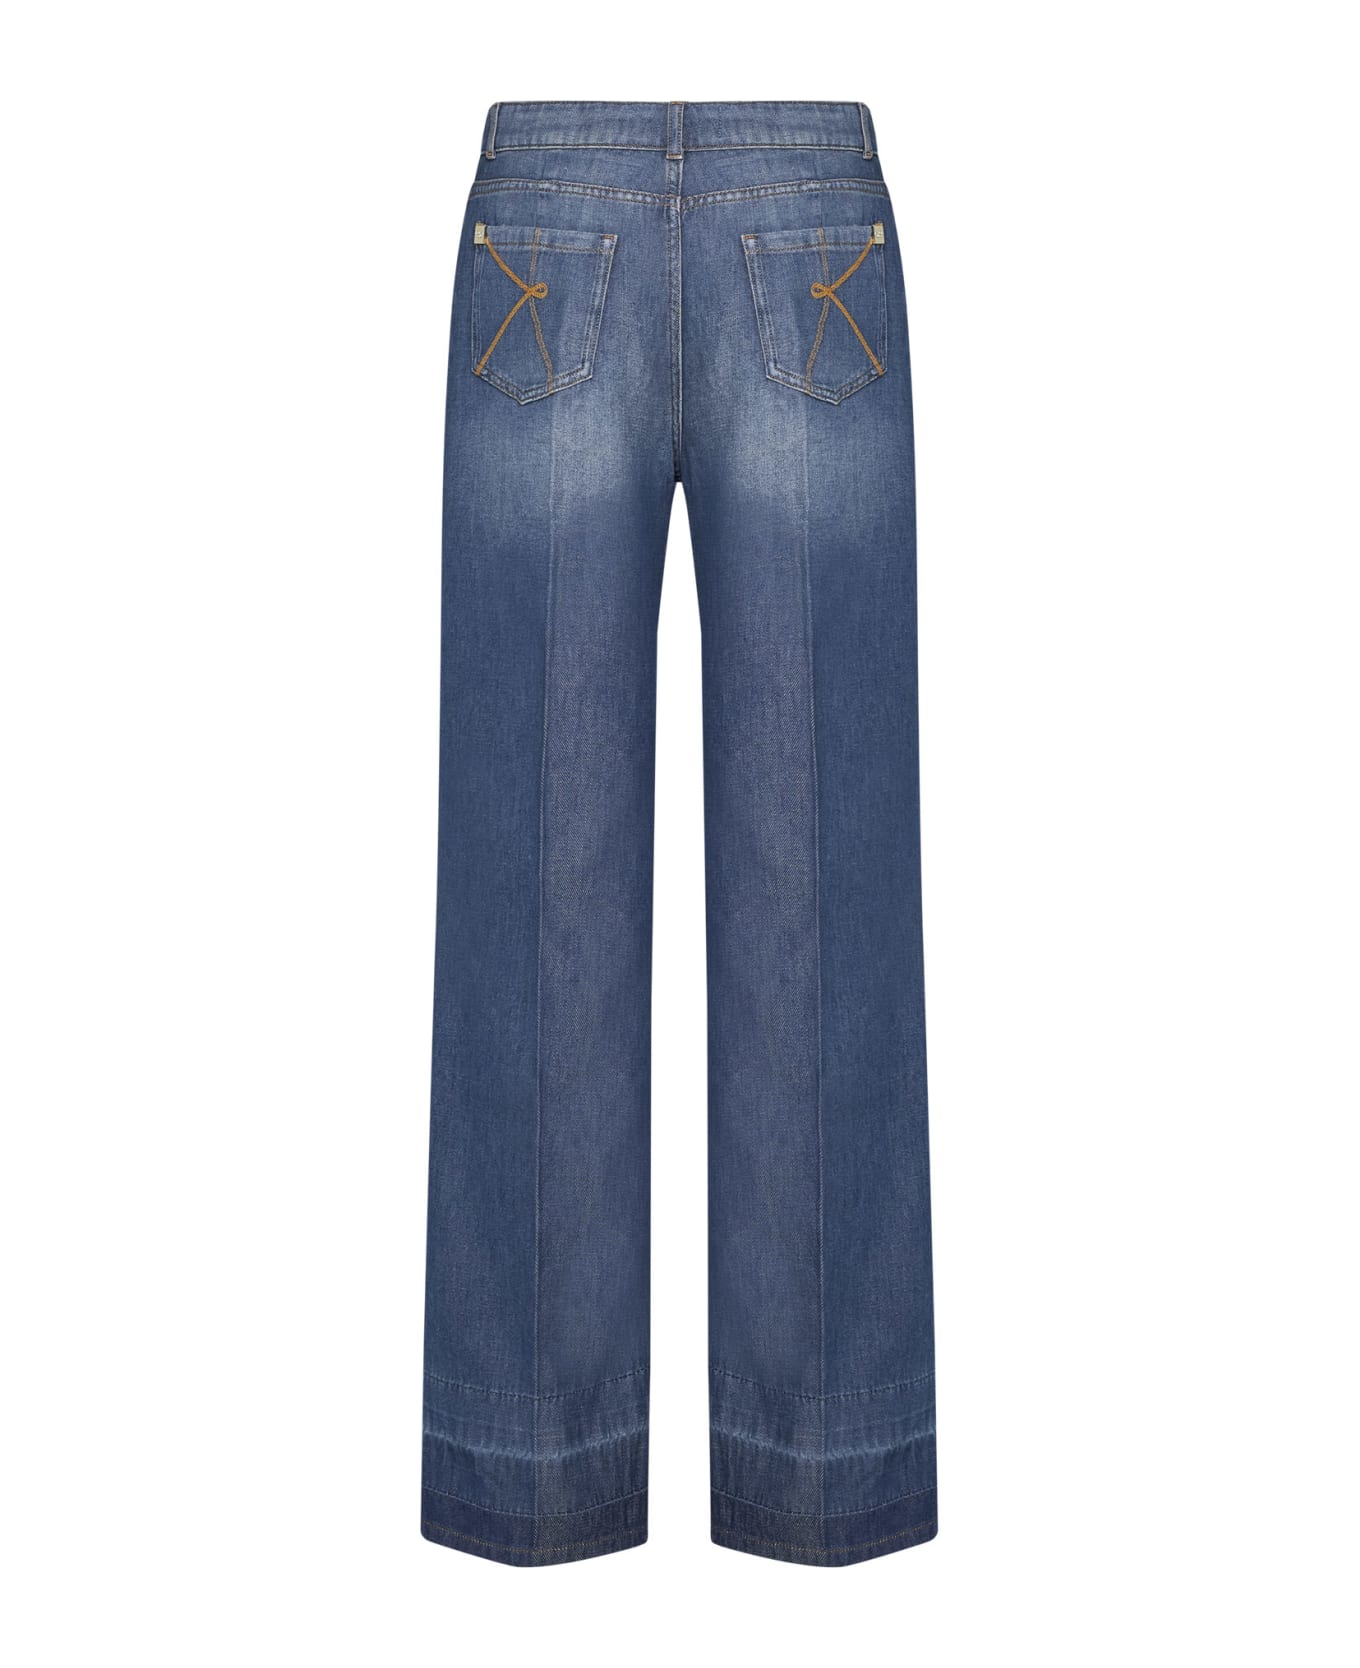 Kaos Jeans - Jeans medio